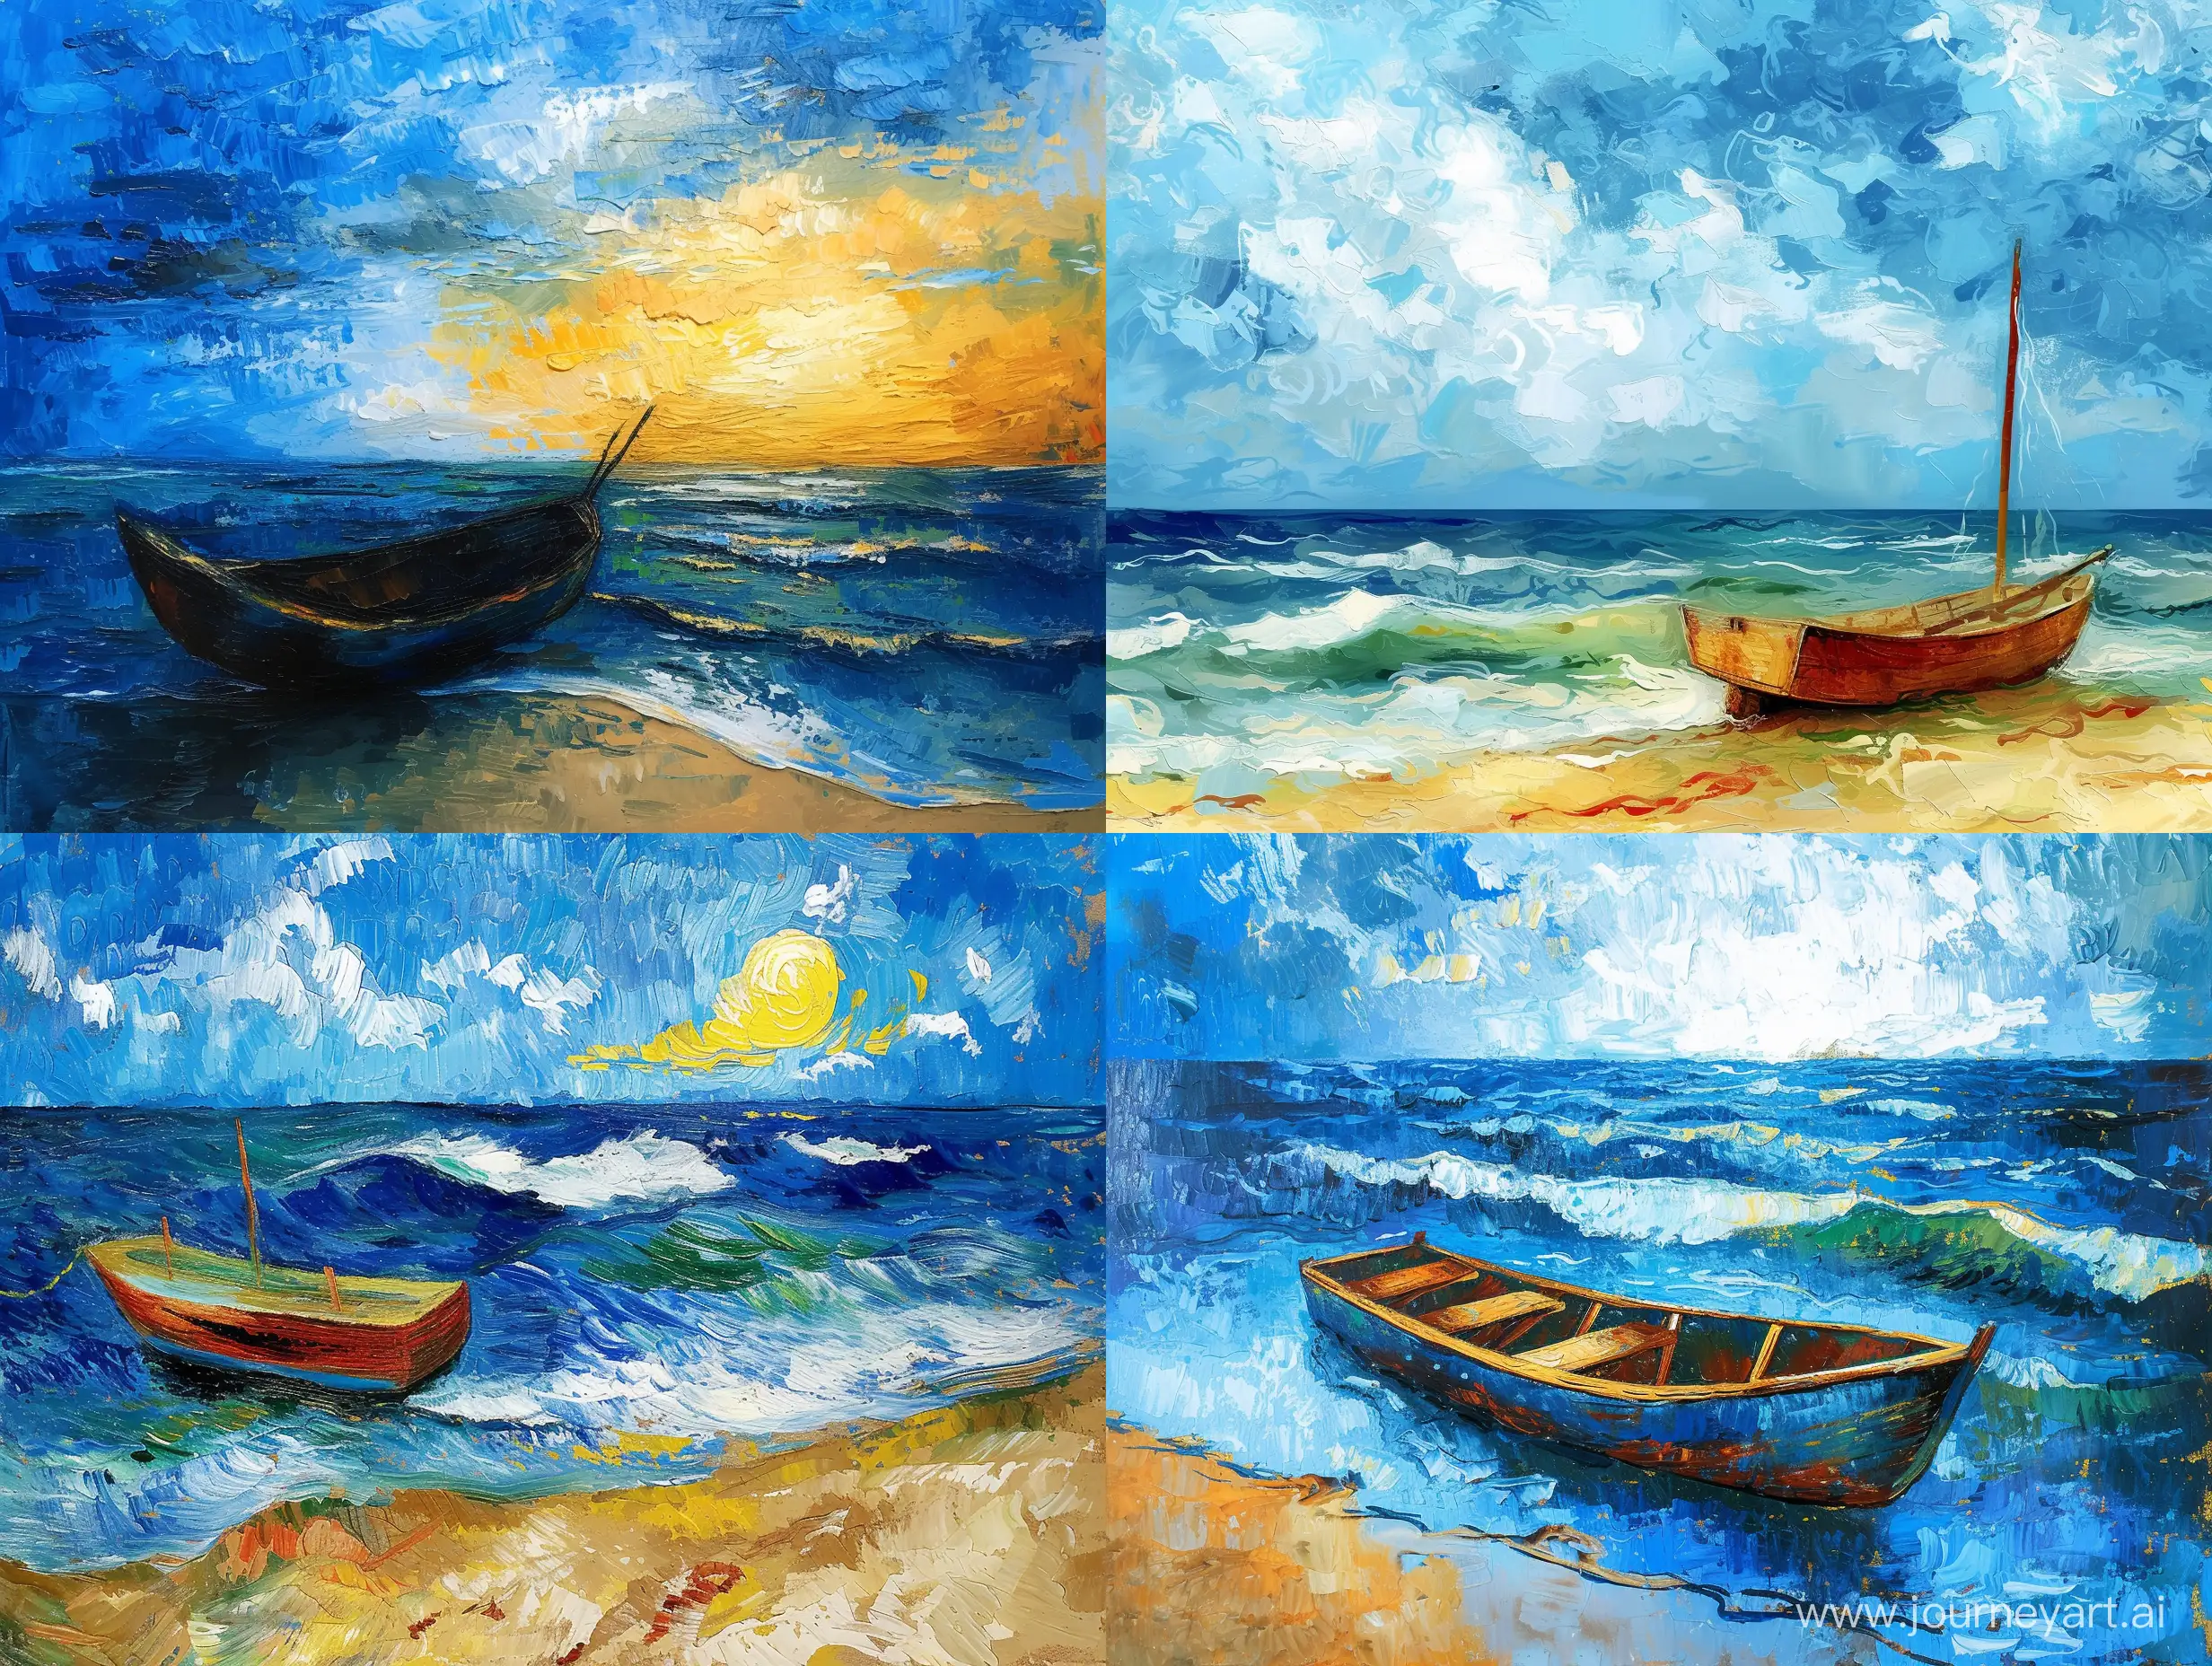 Van-GoghInspired-Seascape-with-Boat-A-Vivid-Artistic-Maritime-Scene